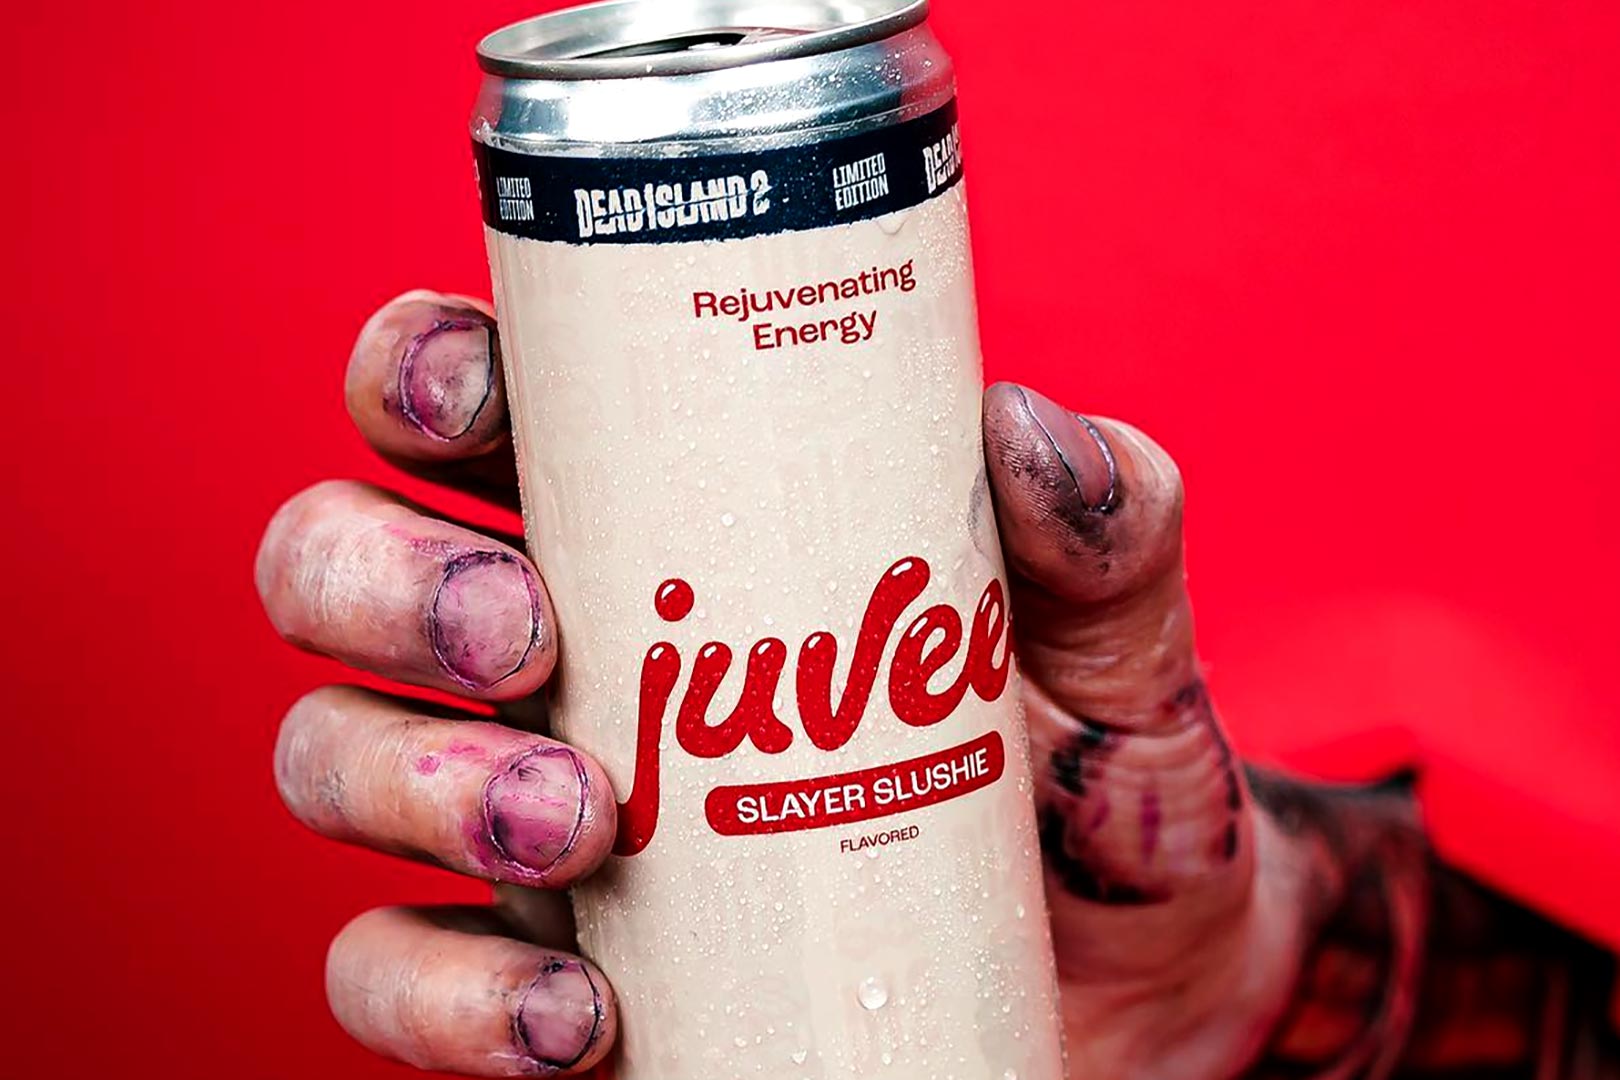 Juvee X Dead Island Slayer Slushie Flavor